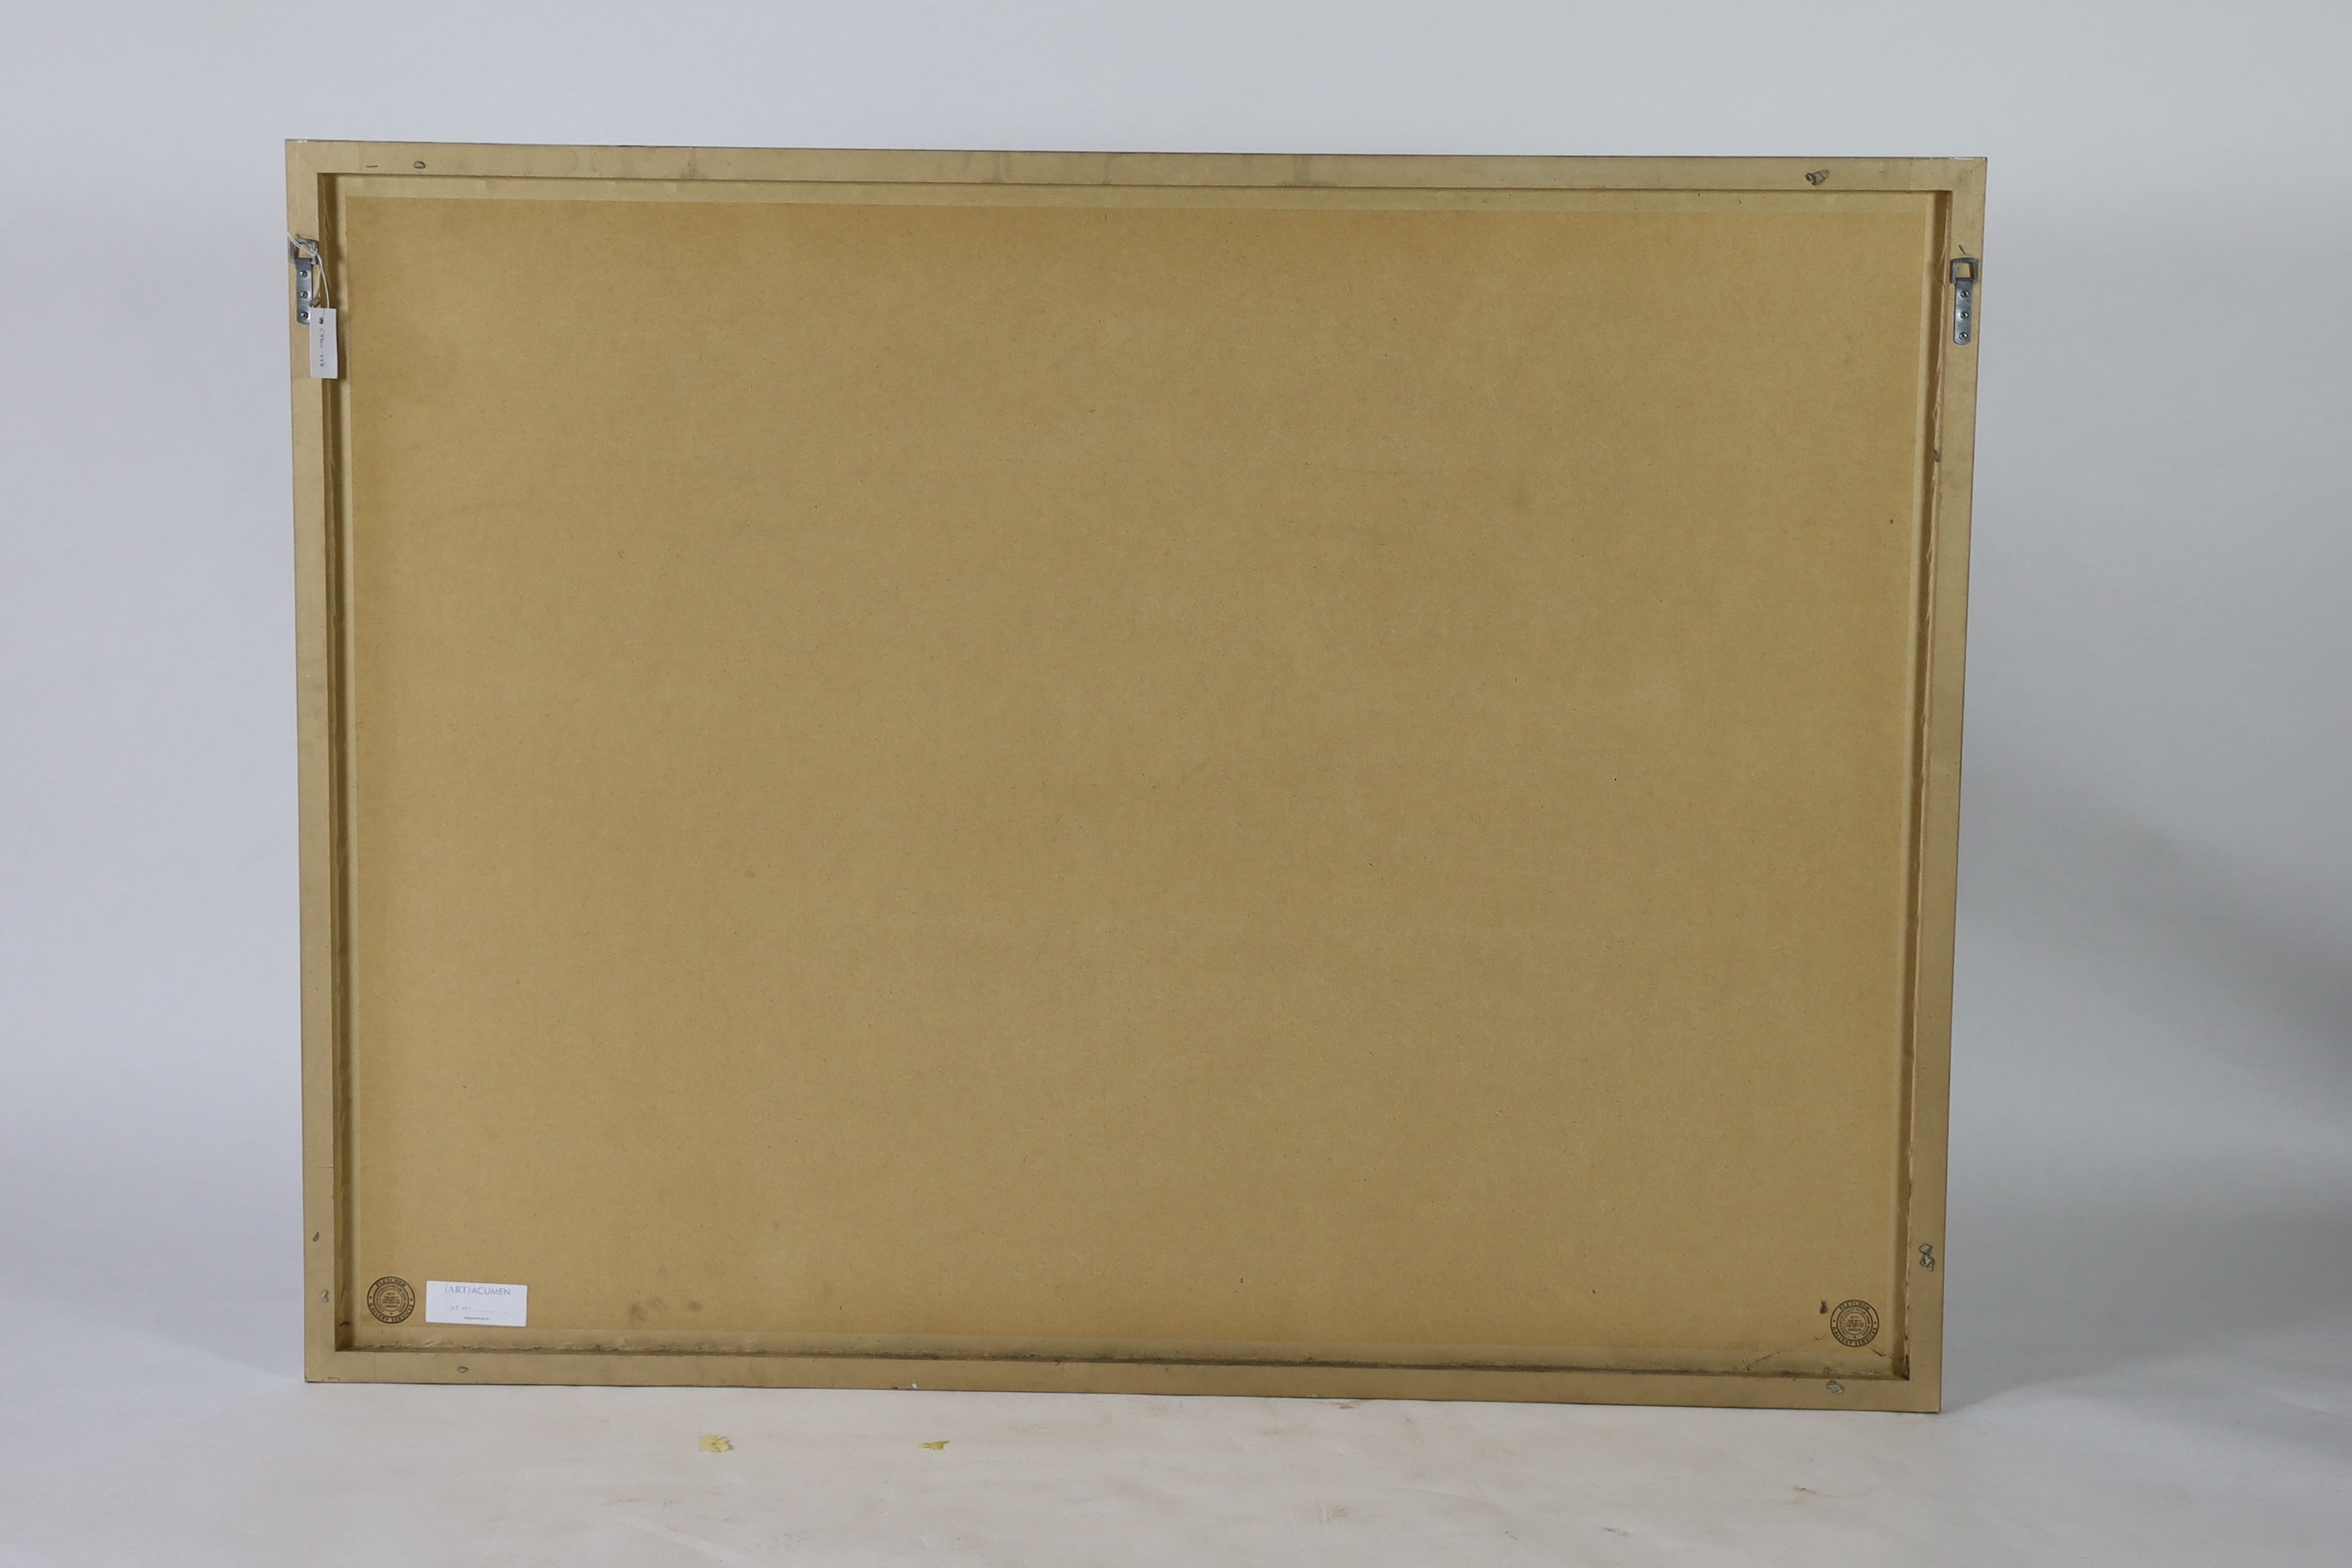 Albert Irvin OBE, RA (British 1922-2015), 'Oval I', screenprint, 115 x 158cm